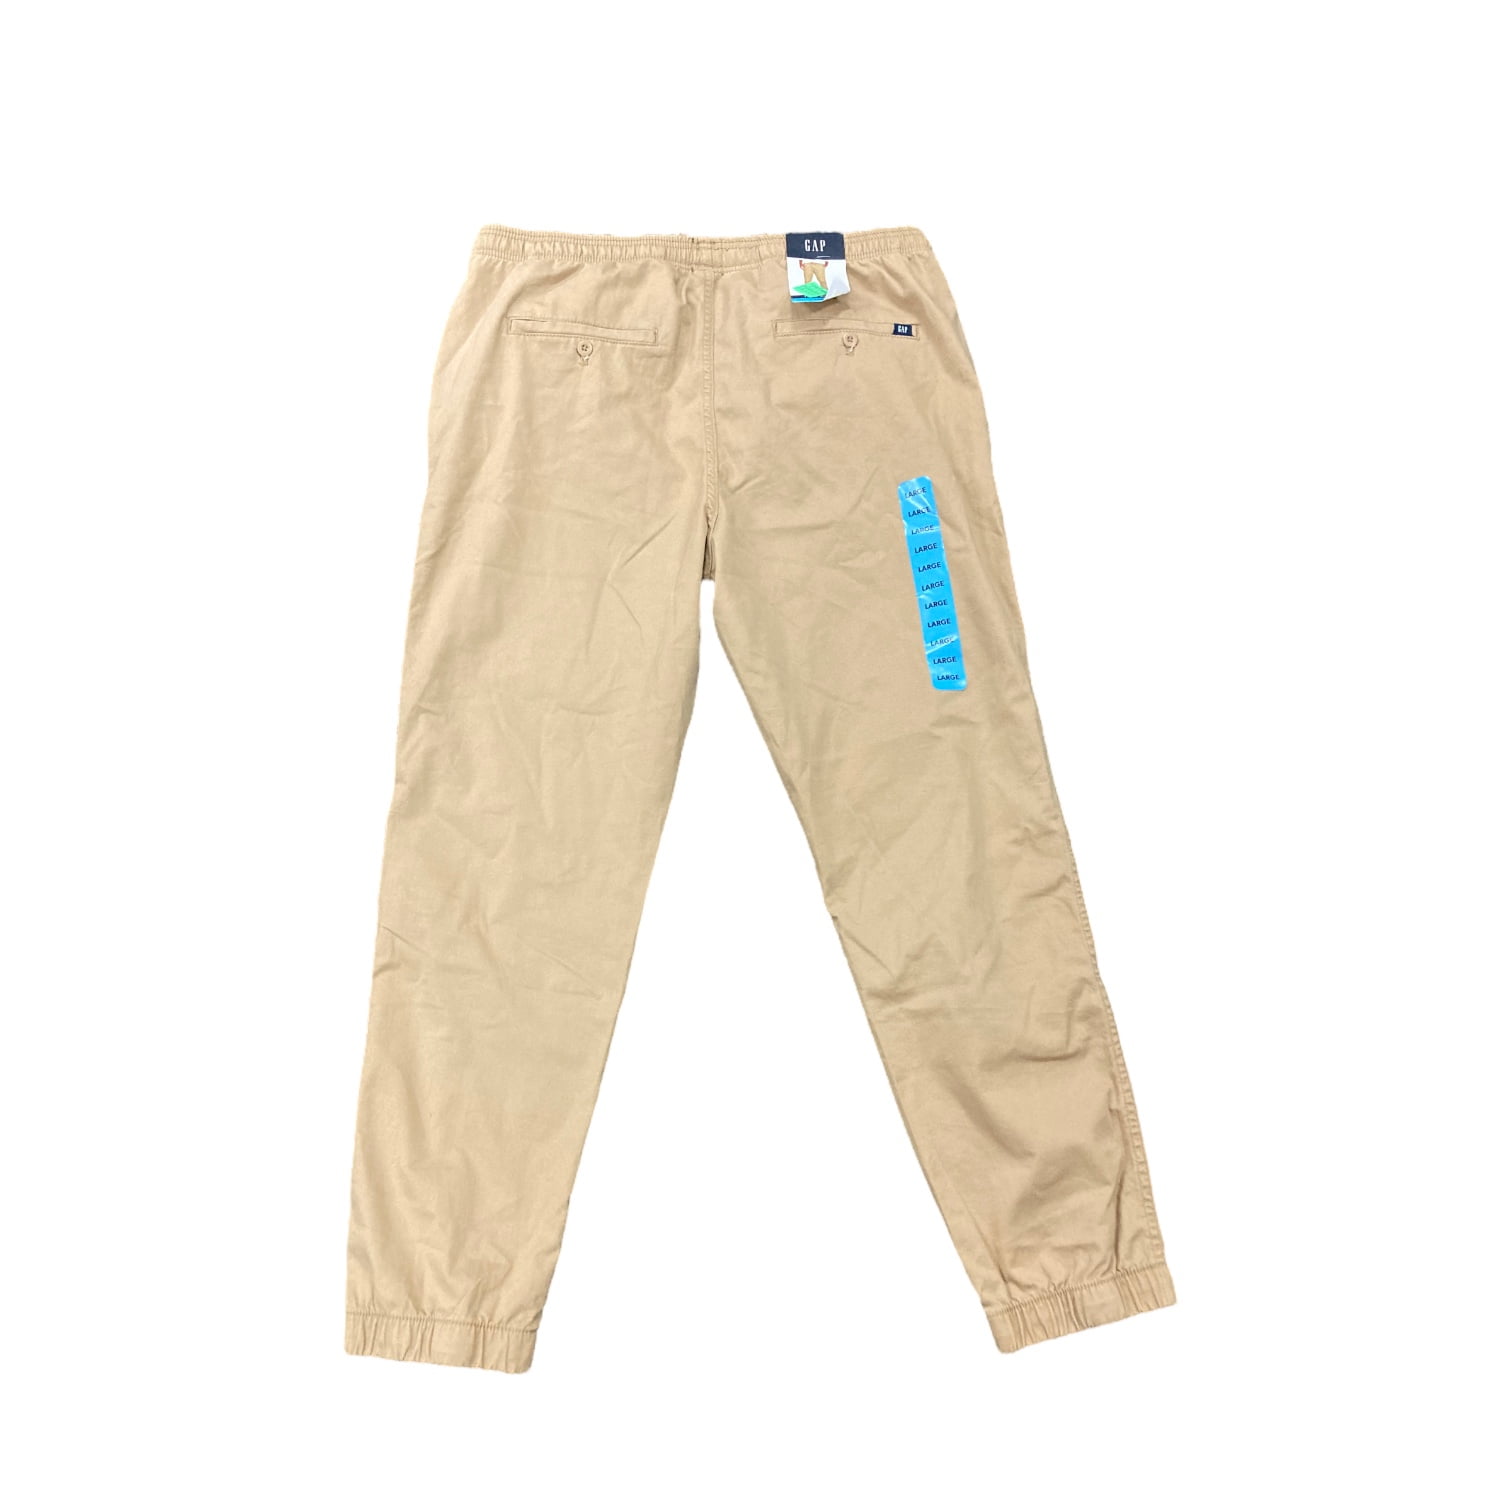 GAP Mens Essential Skinny Fit Khaki Chino Pants True Black 36X30 at Amazon  Men's Clothing store